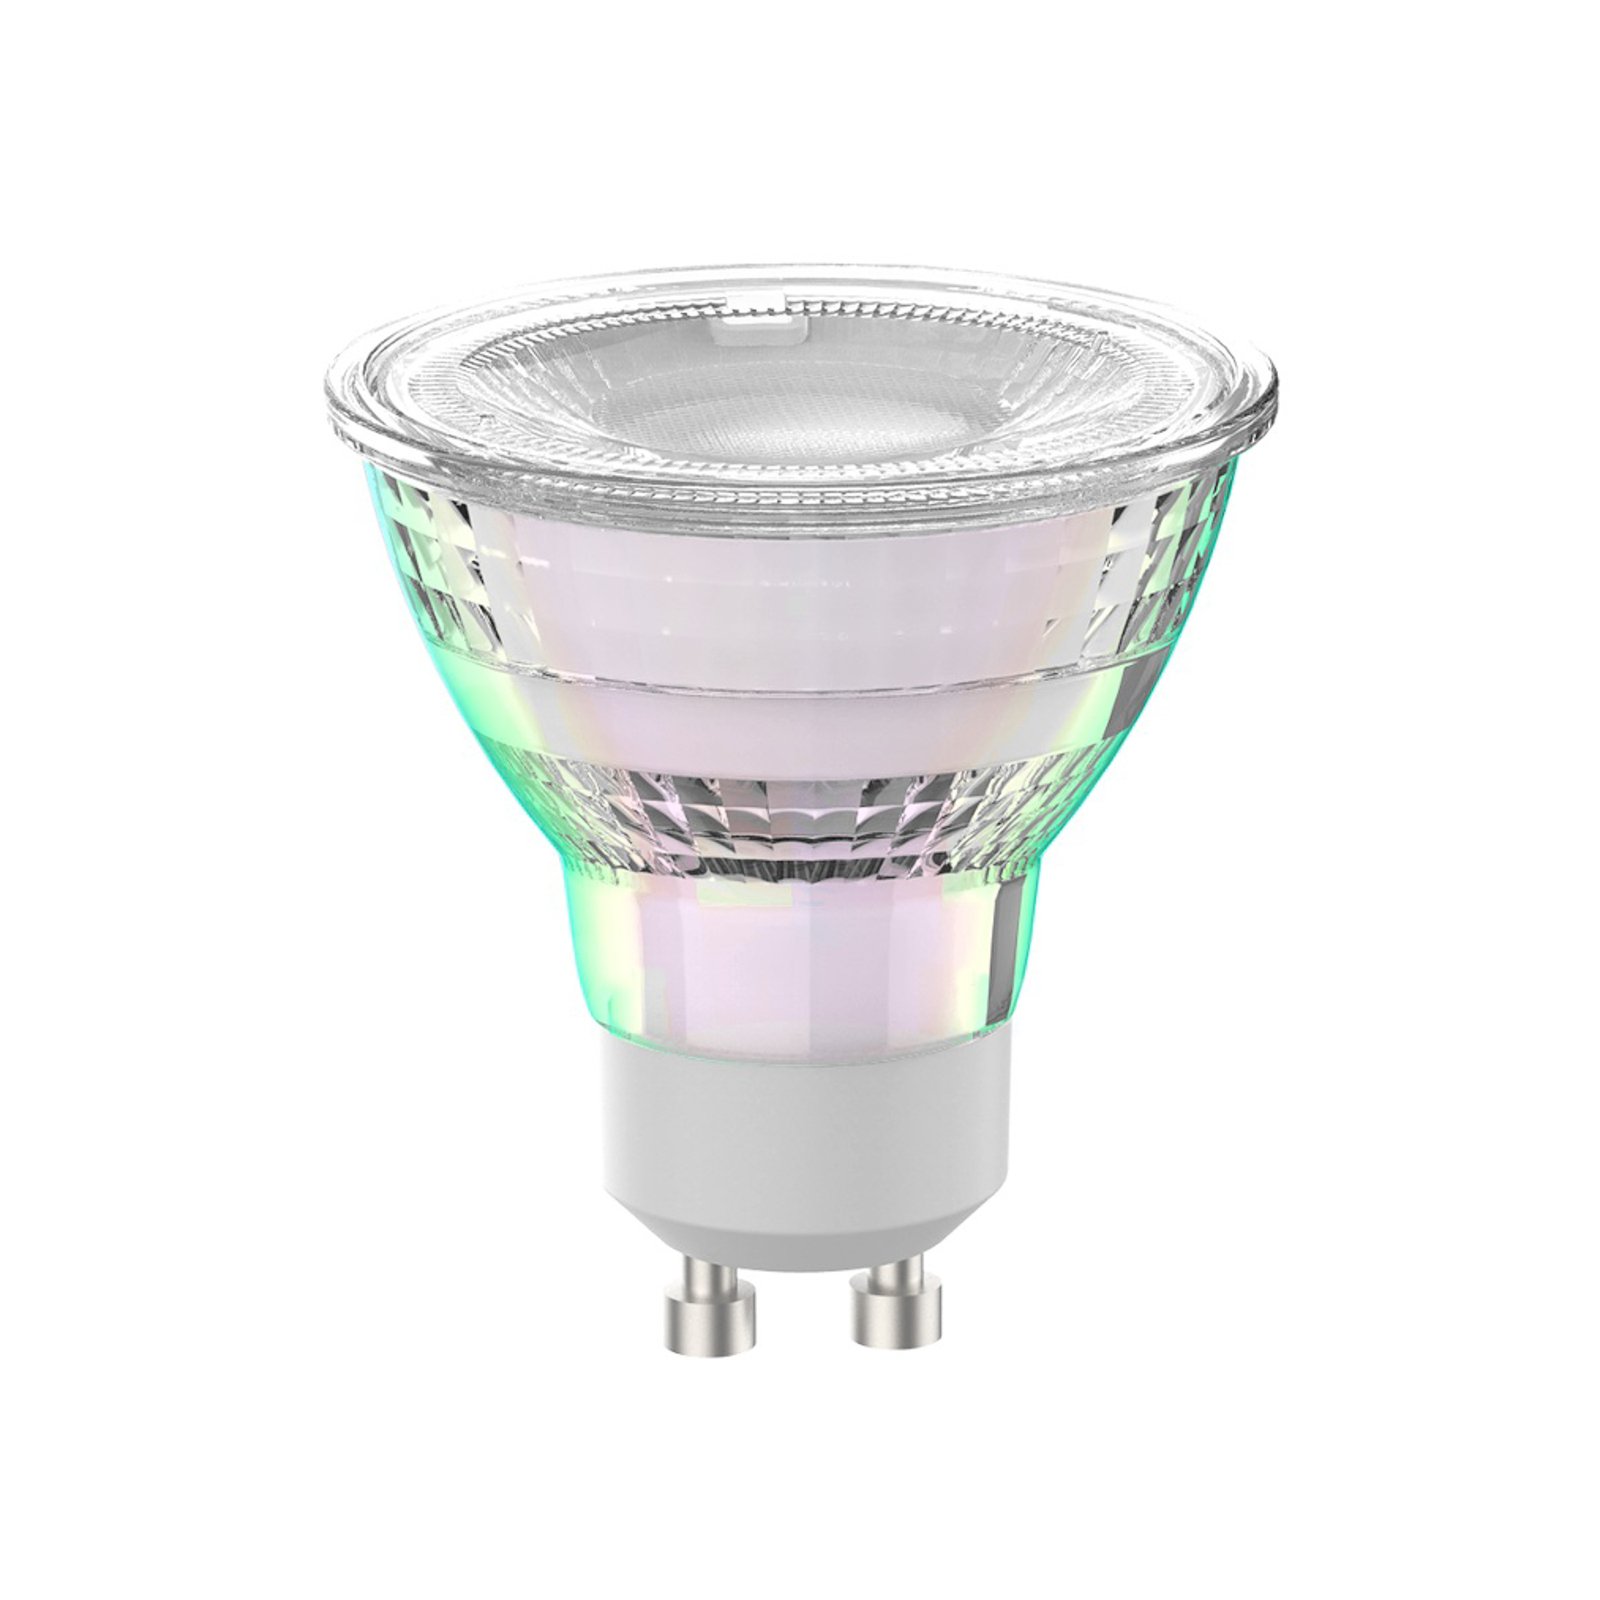 Arcchio LED bulb GU10 2.5W 6500K 450lm glass set of 10